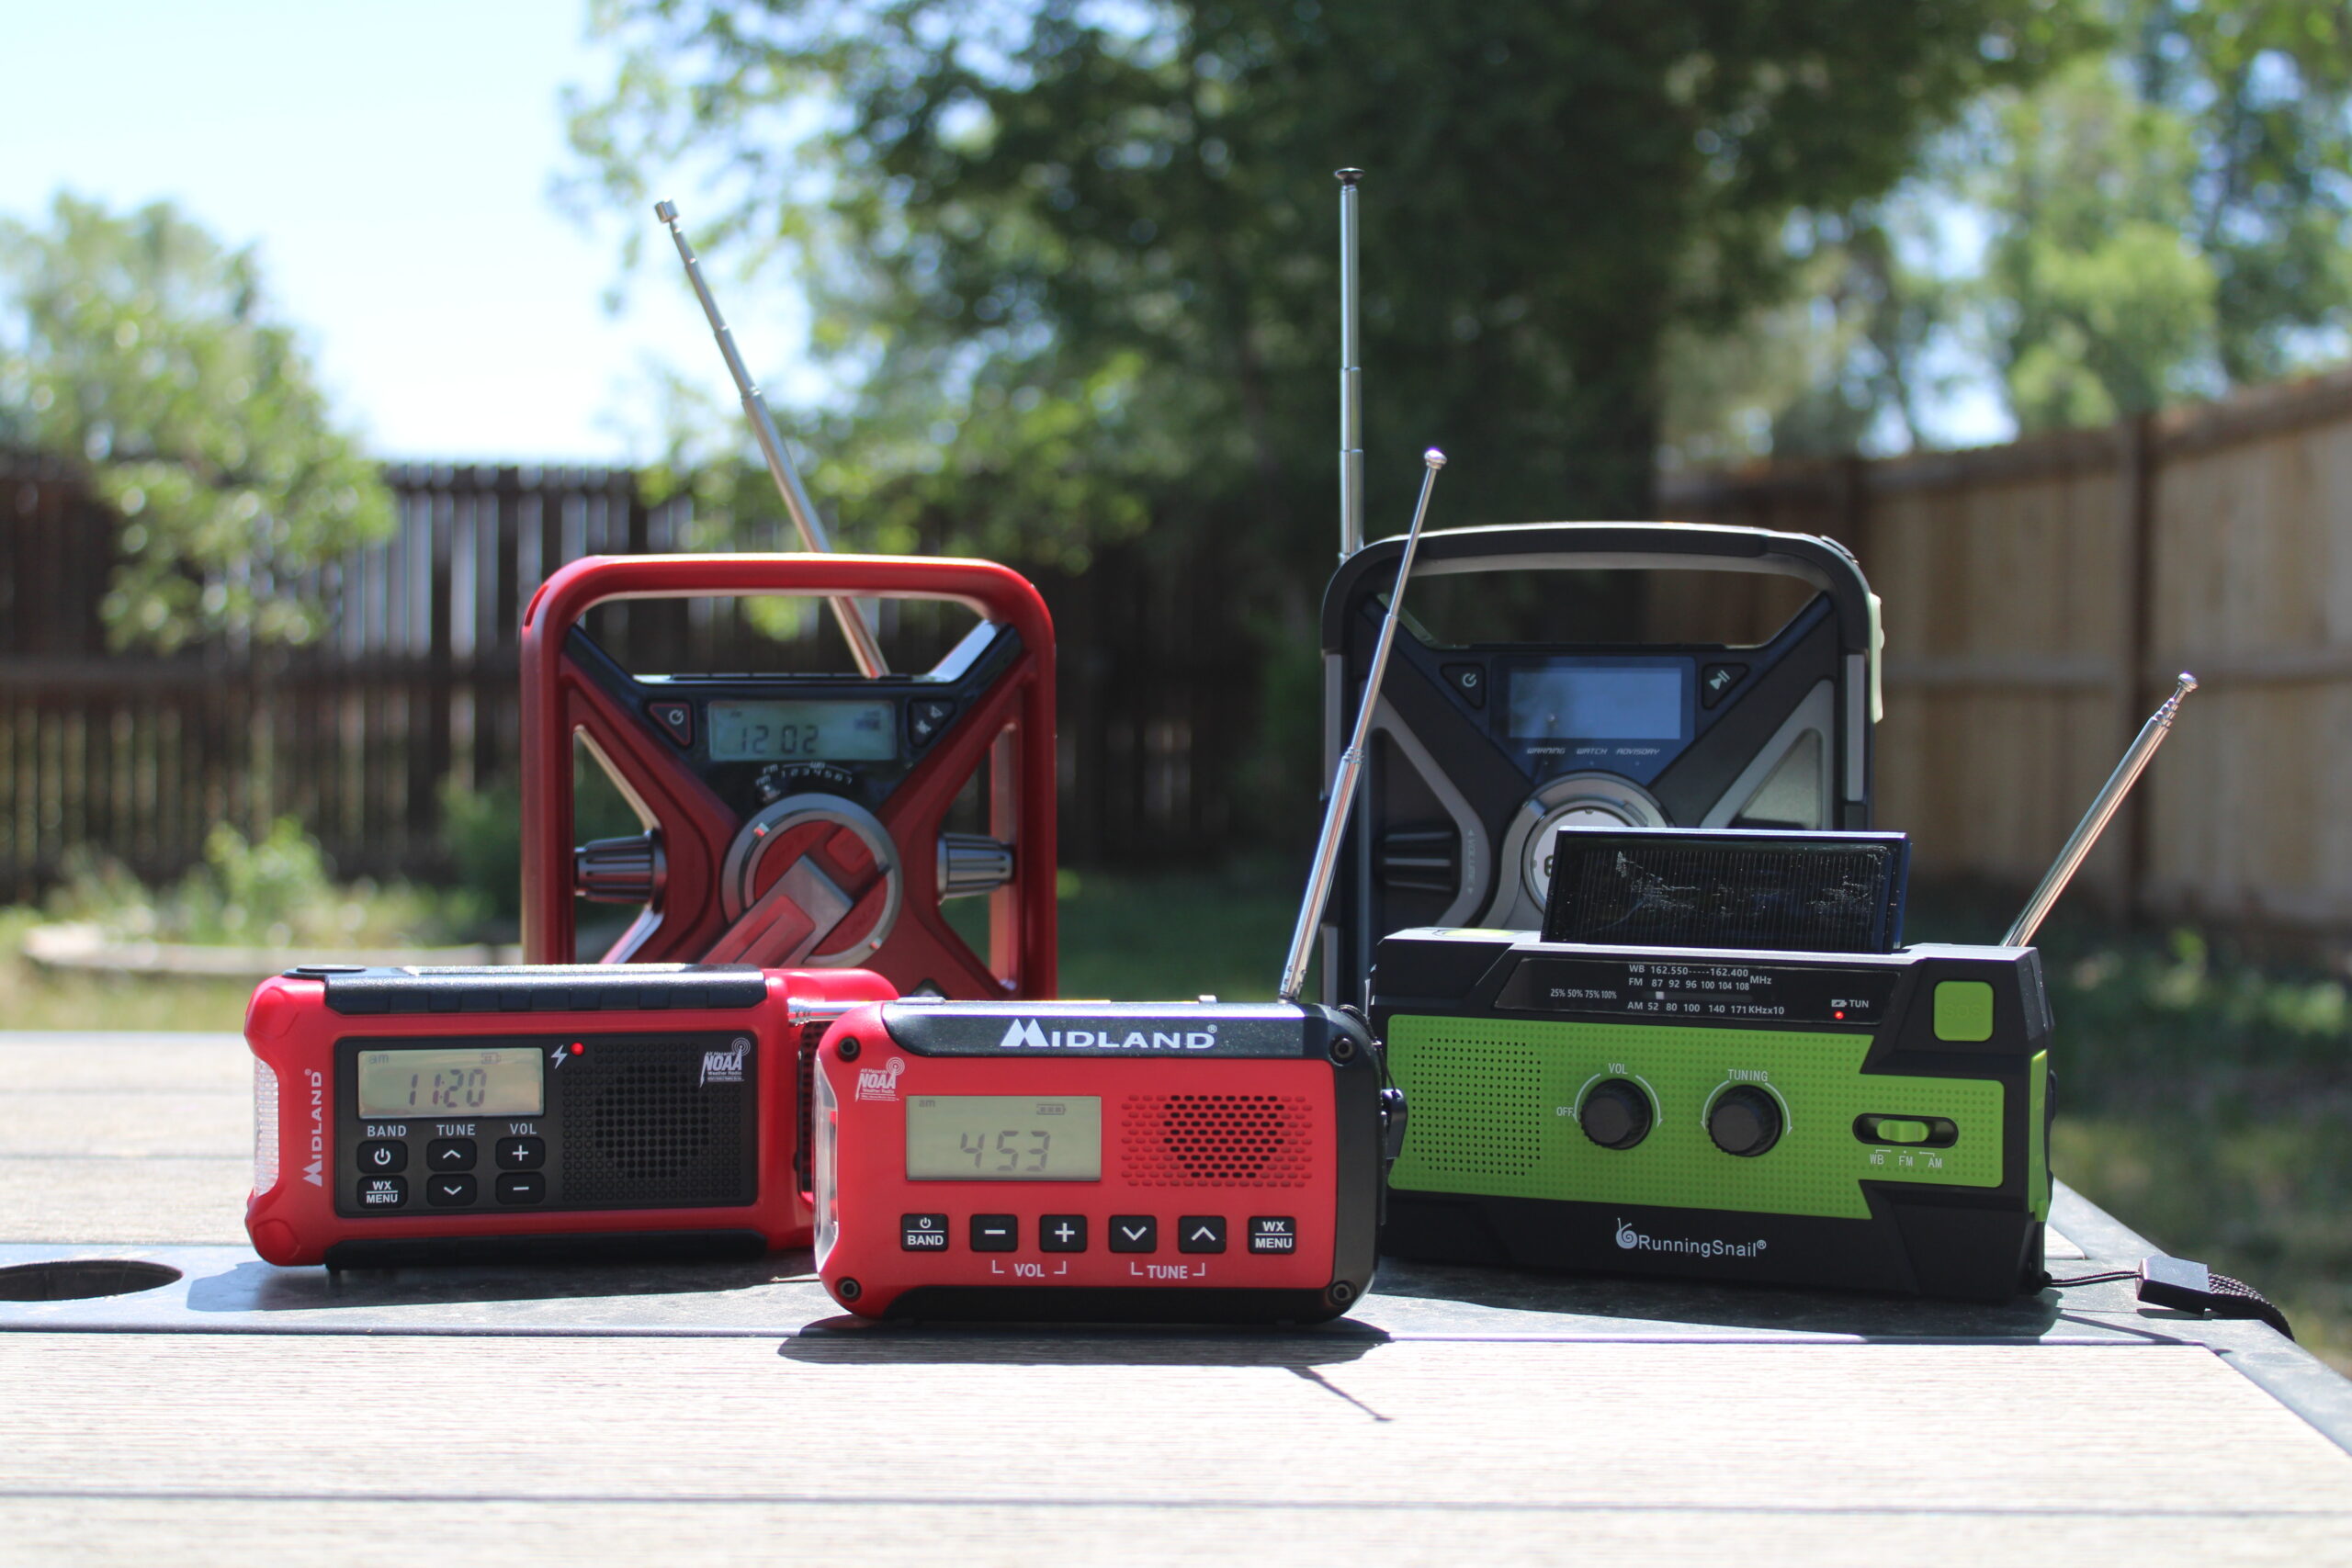 The best emergency radios on display in a backyard